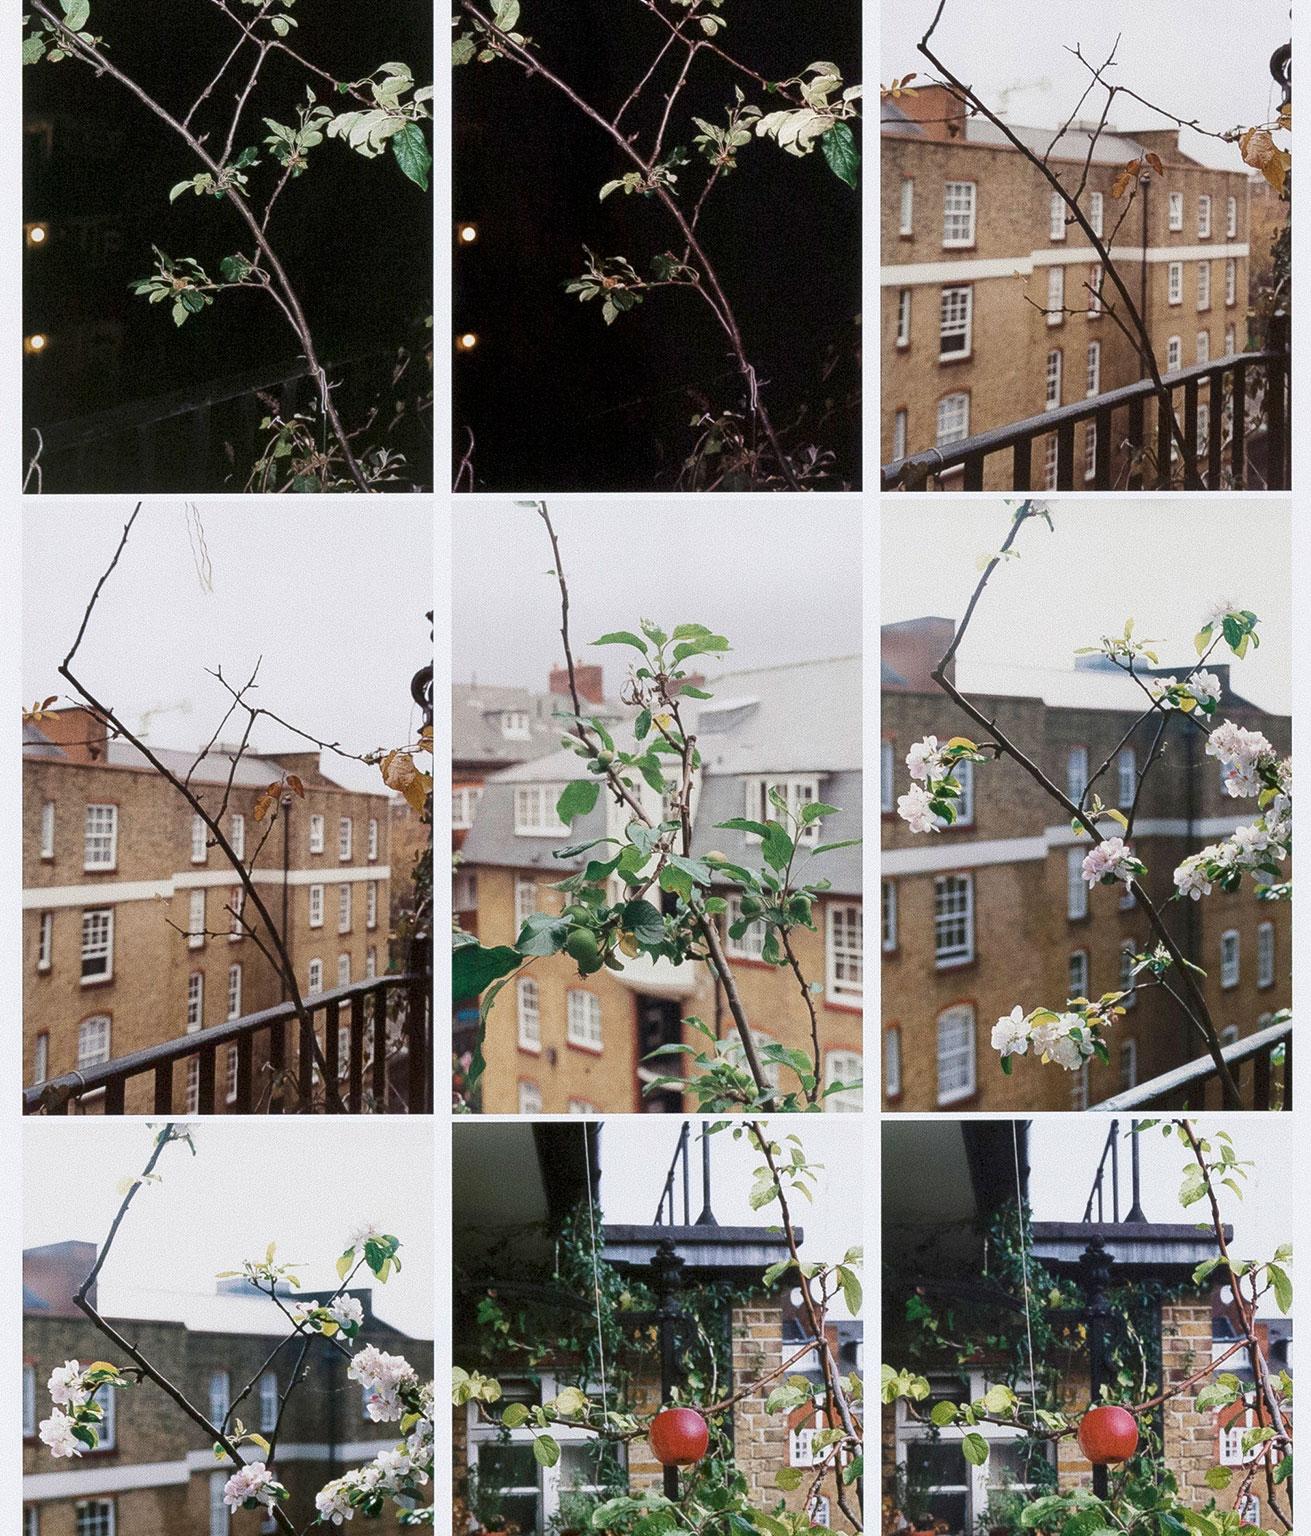 Process (Apple Tree), C-Print, 2012 - Conceptual Photograph by Wolfgang Tillmans